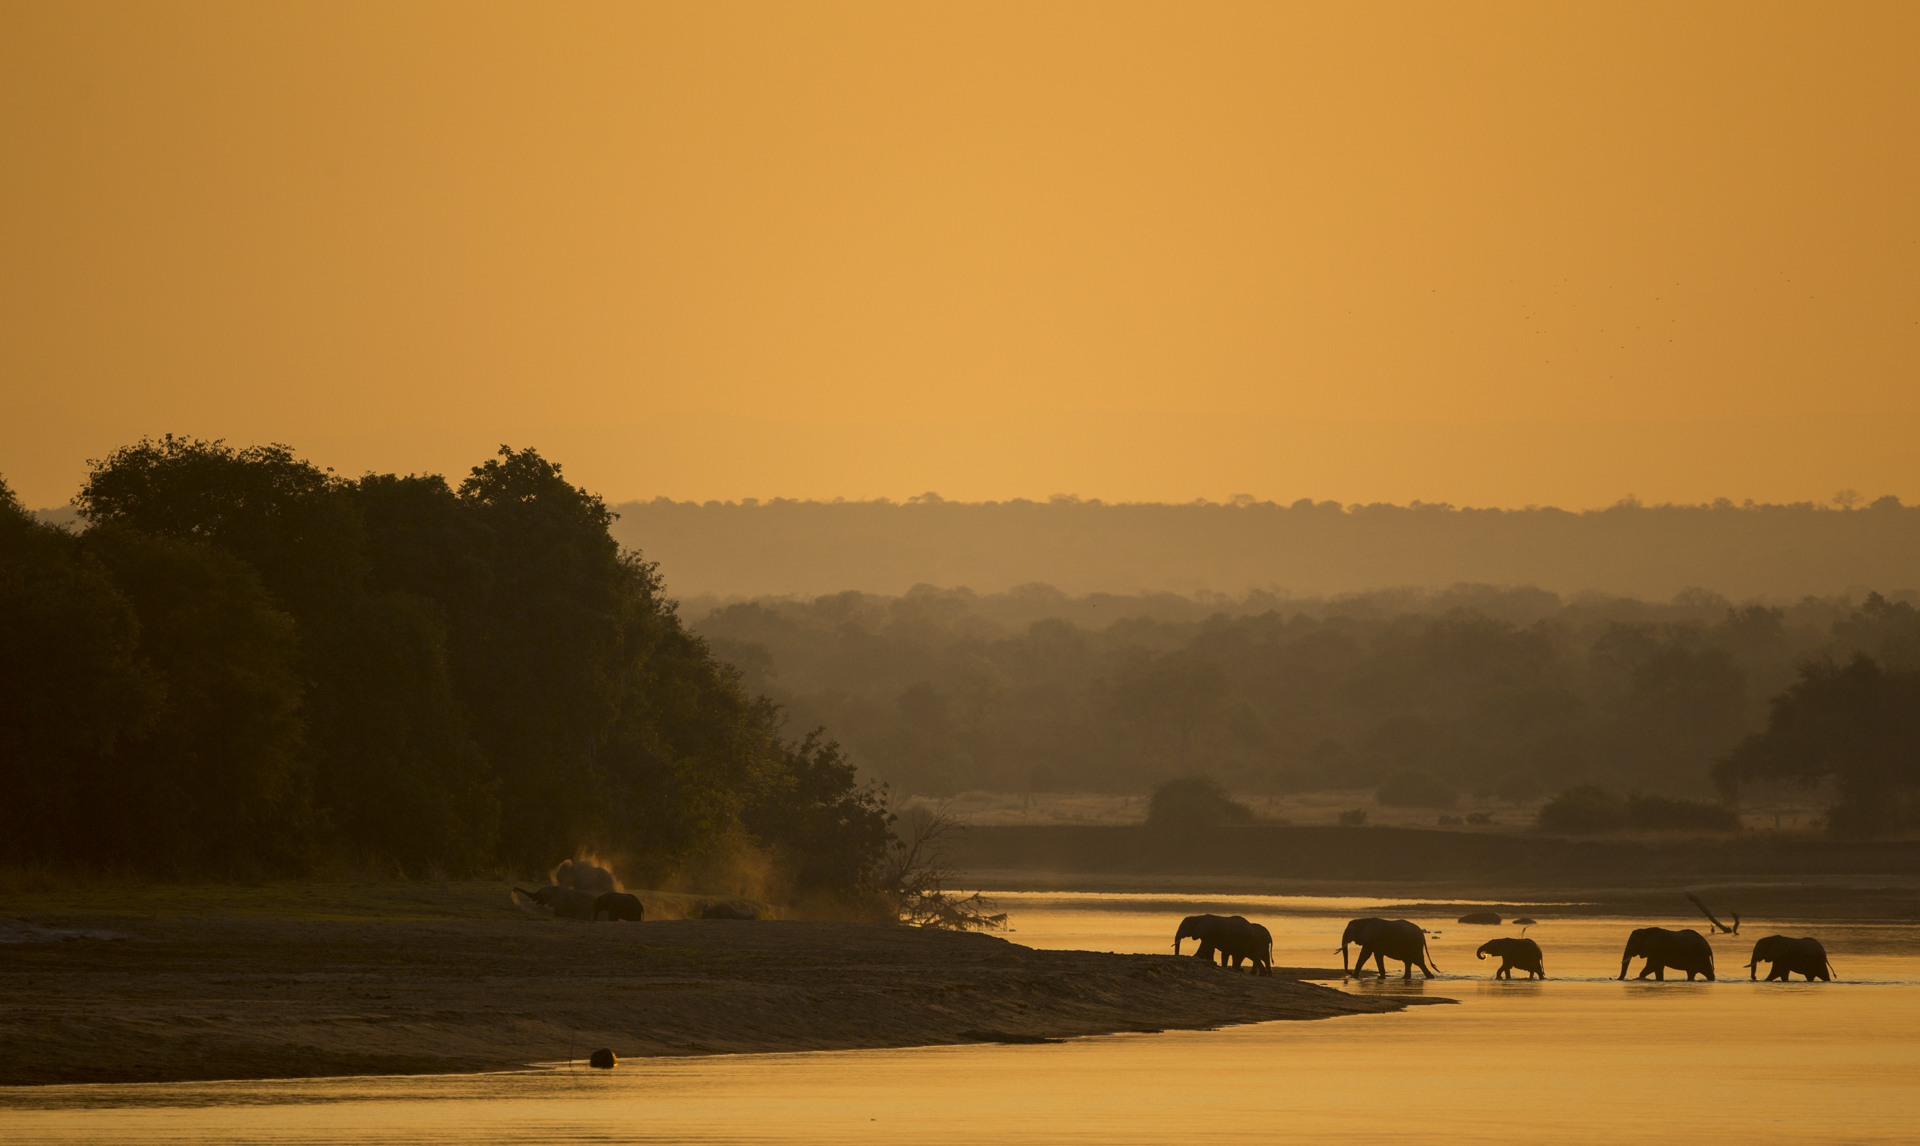  African elephants cross the Luangwa river, Zambia 